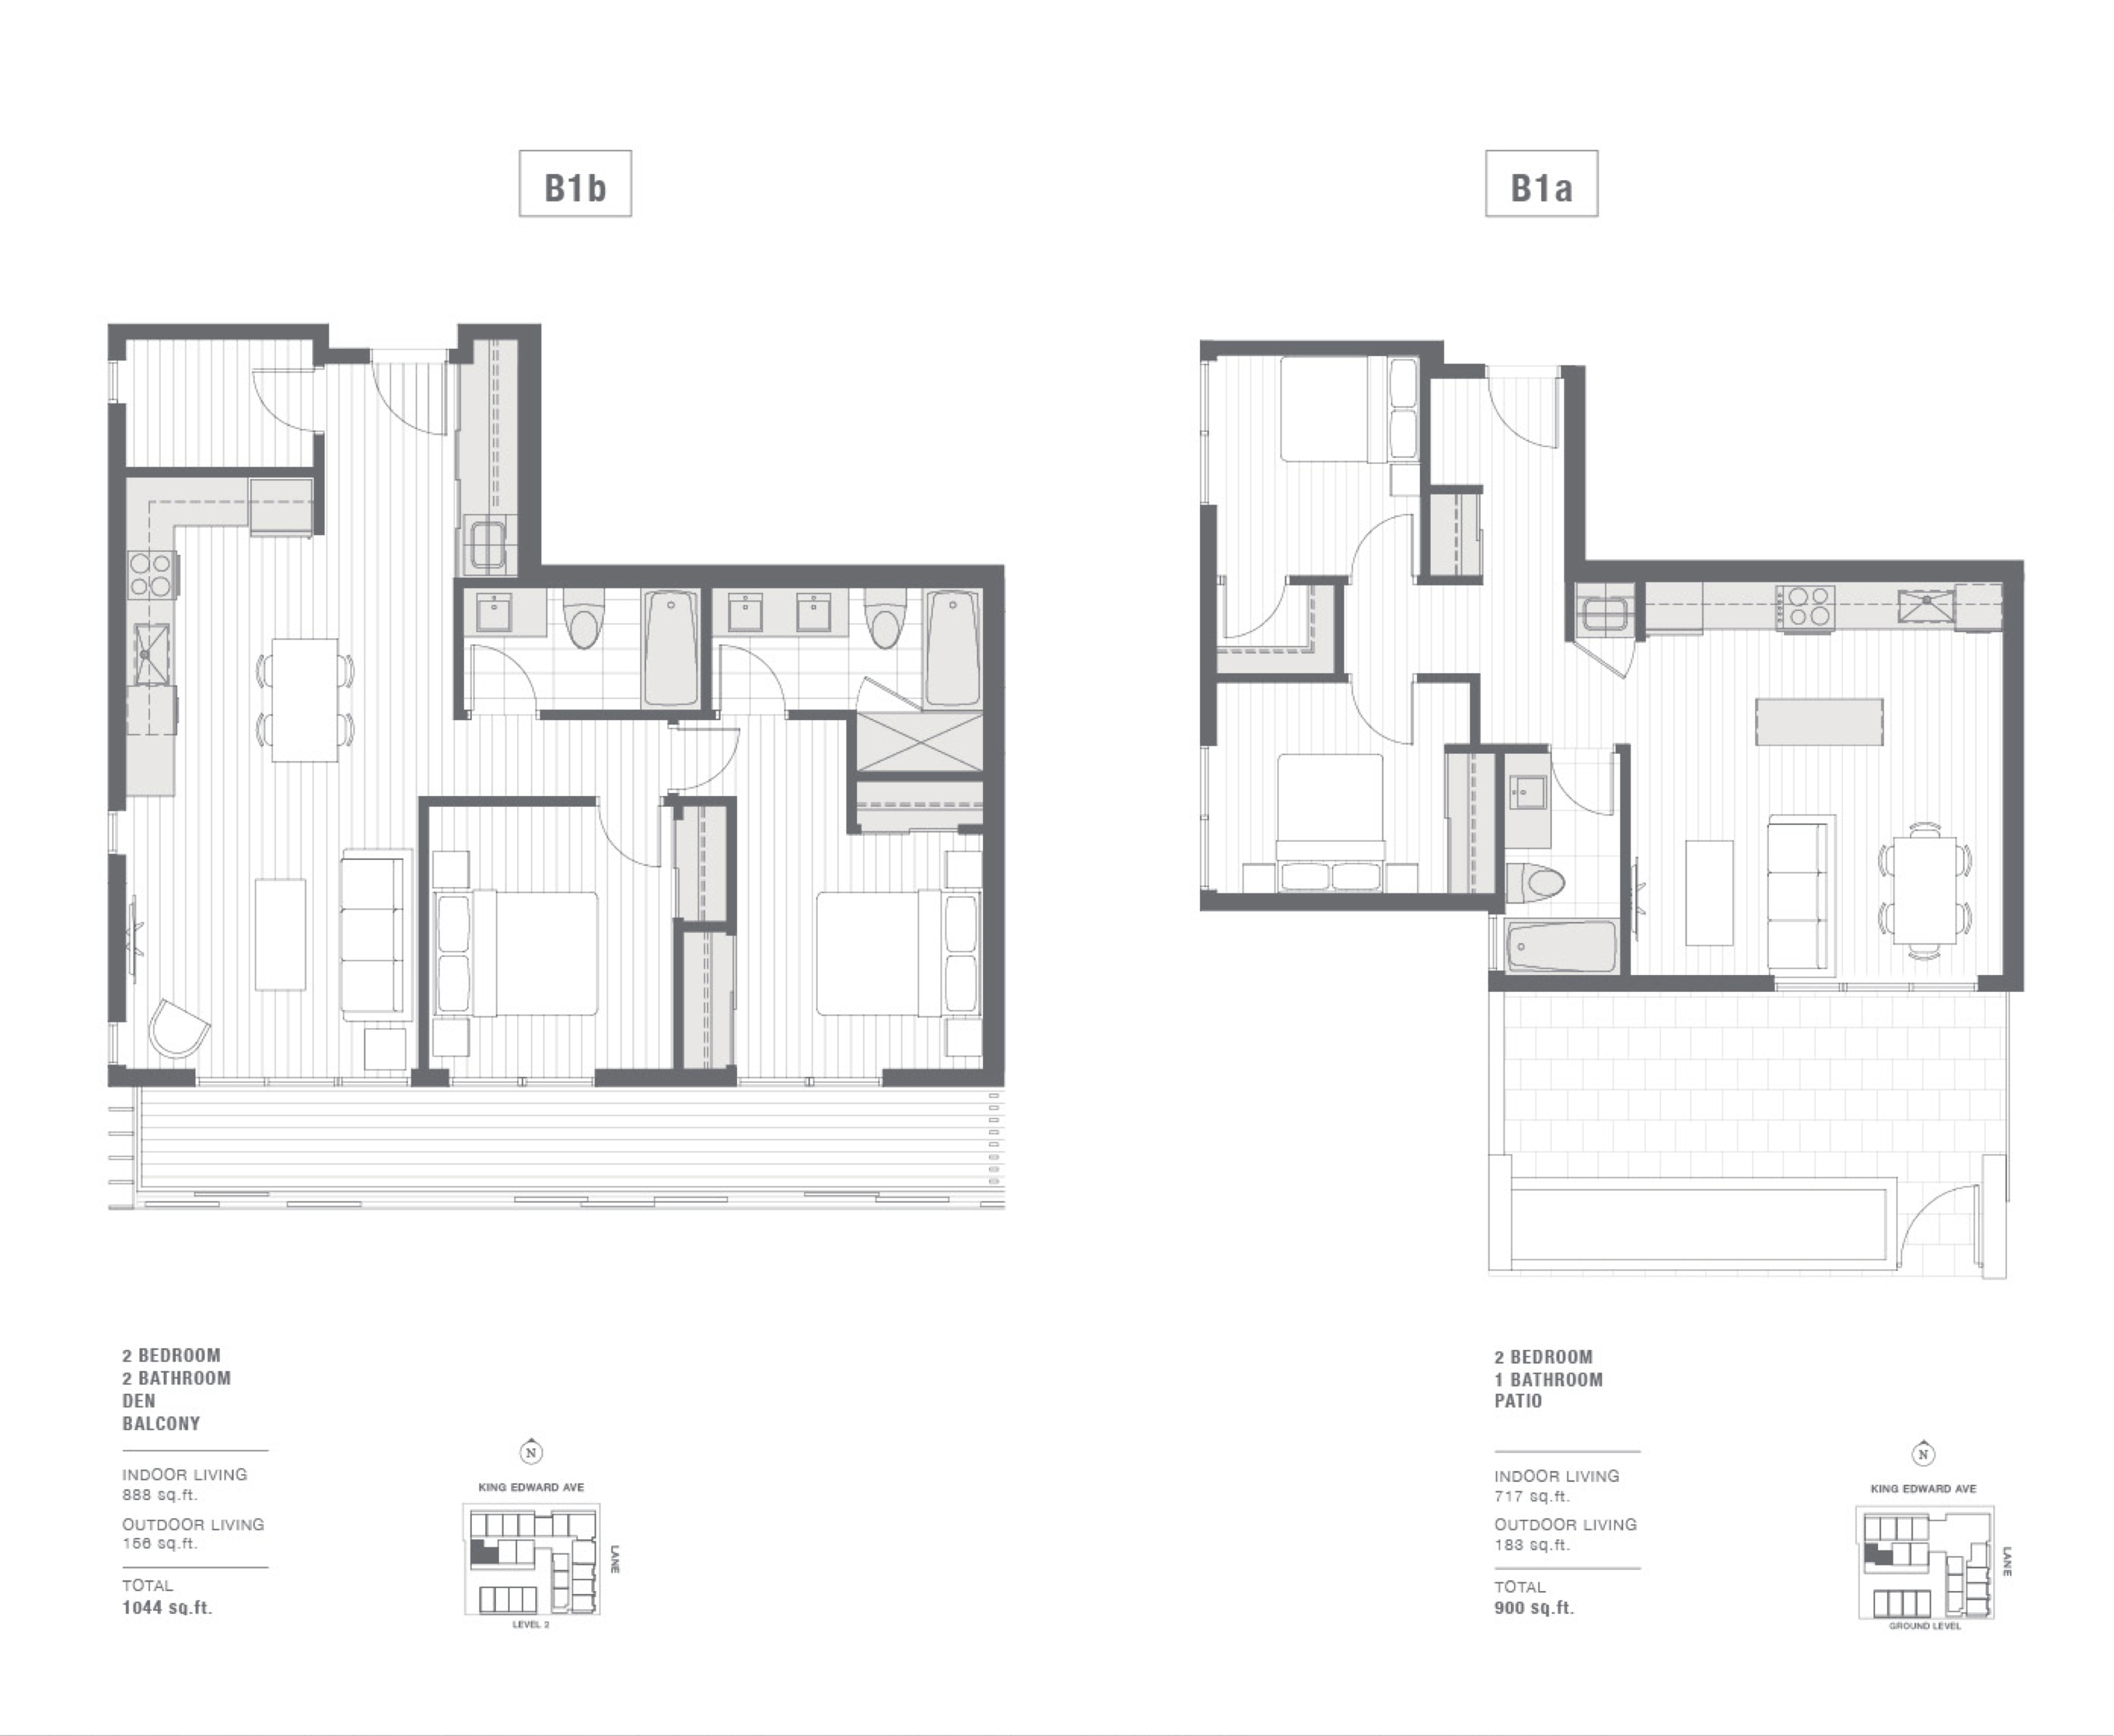 Cambie + King Edward 2-bedroom floorplan.